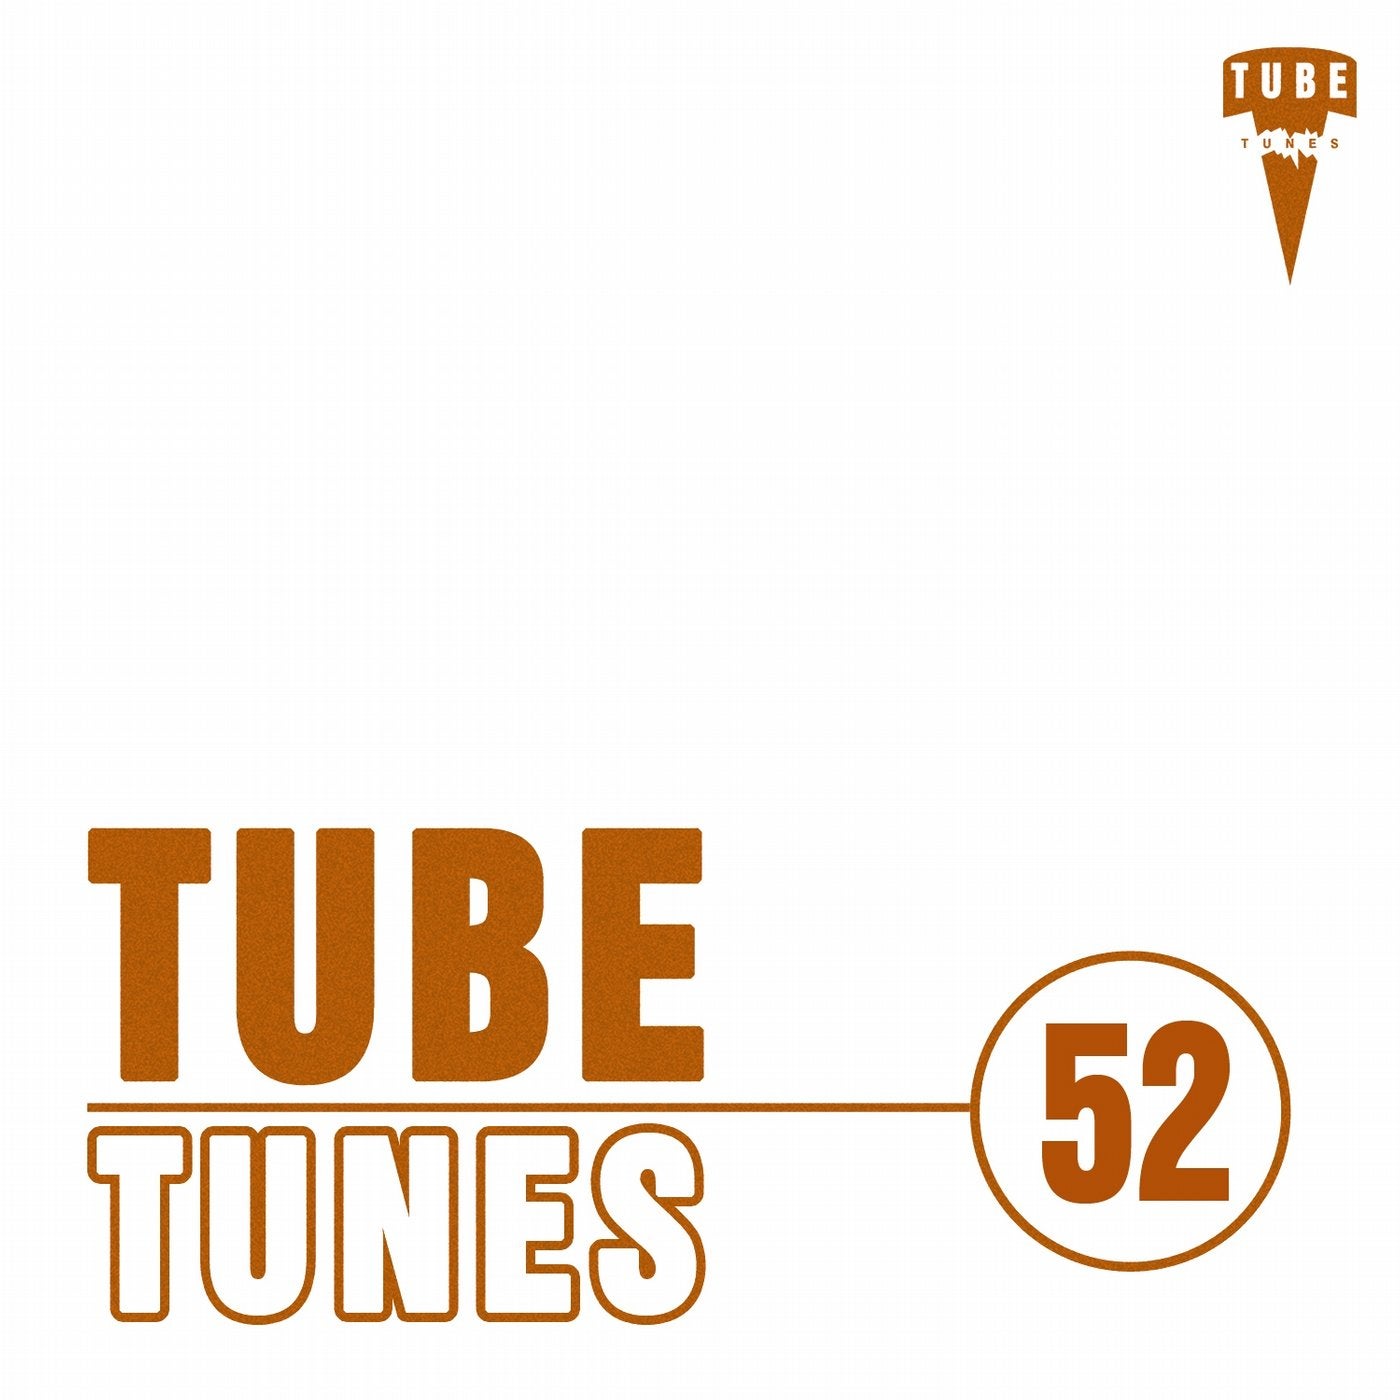 Tube Tunes, Vol.52